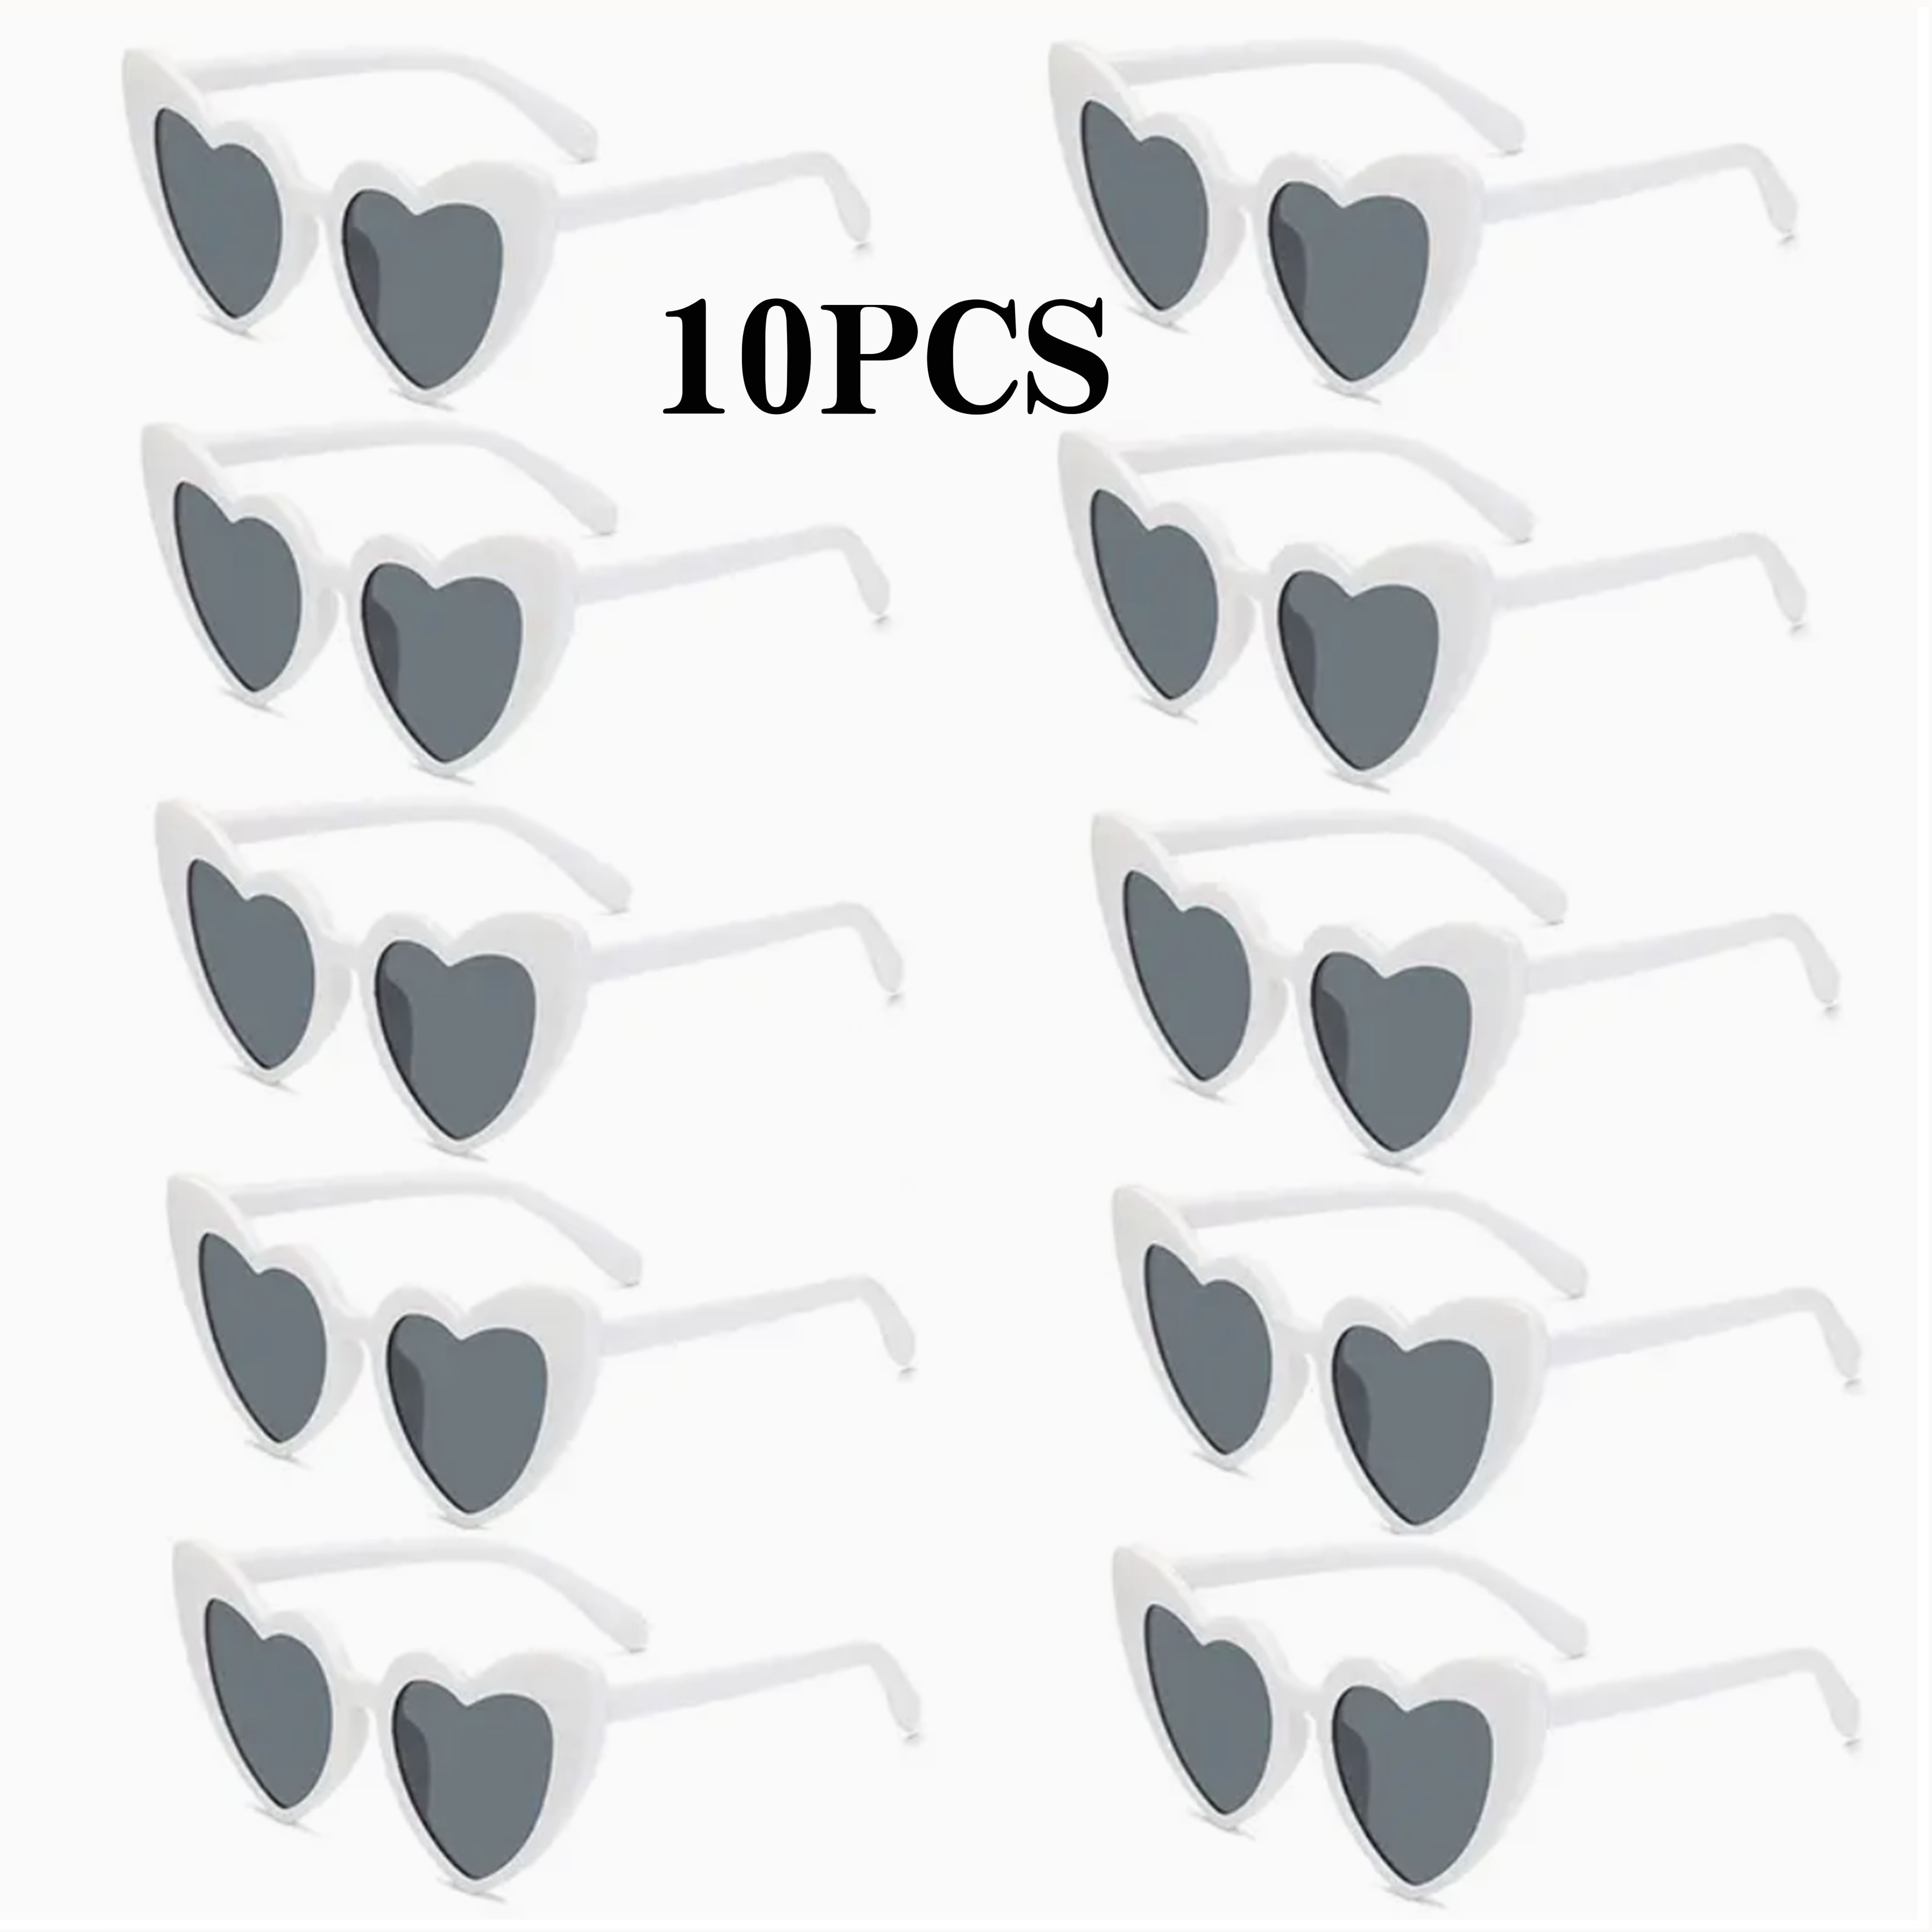 

10pcs Heart Shaped Shades Glasses Love Heart Glasses Pc Frame For Women's Bachelorette Party For Music Festival And Halloween